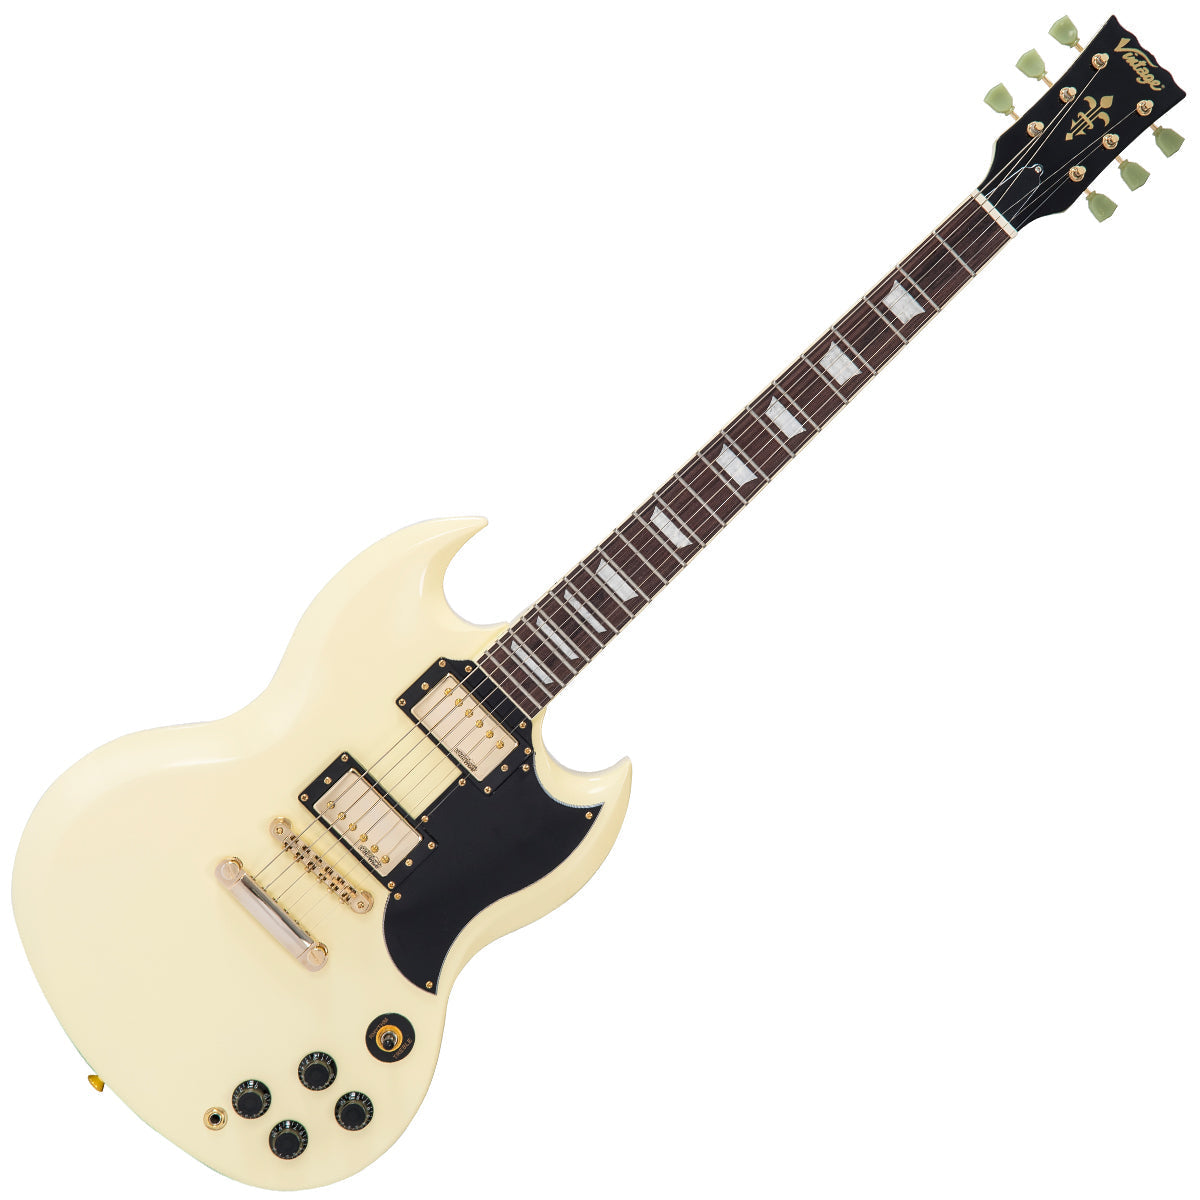 Vintage VS6 ReIssued Electric Guitar ~ Vintage White/Gold Hardware, Electric Guitar for sale at Richards Guitars.